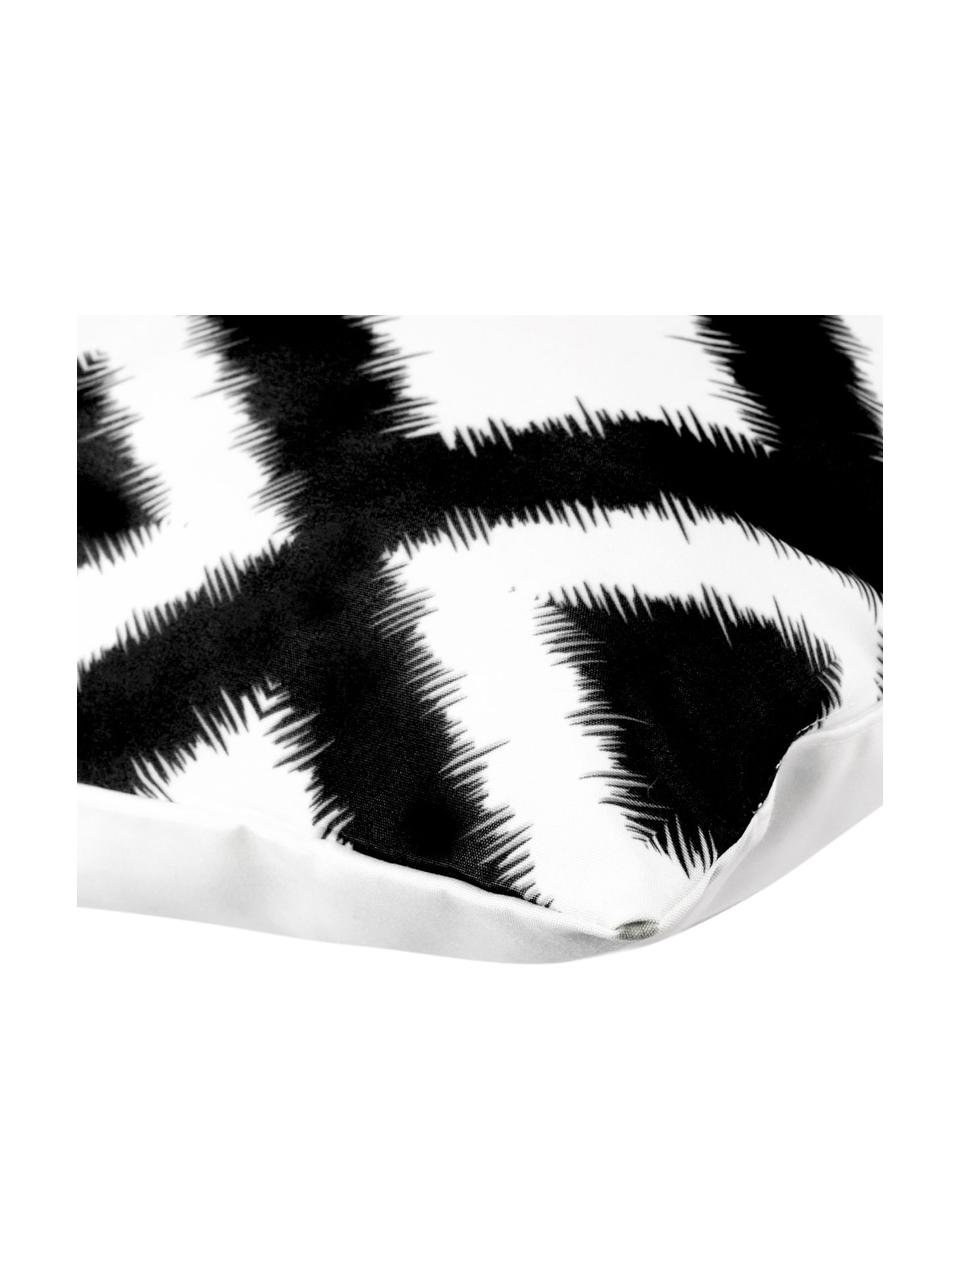 Dubbelzijdige kussenhoes Losange, 70% polyester, 30% katoen, Wit, zwart, 50 x 50 cm